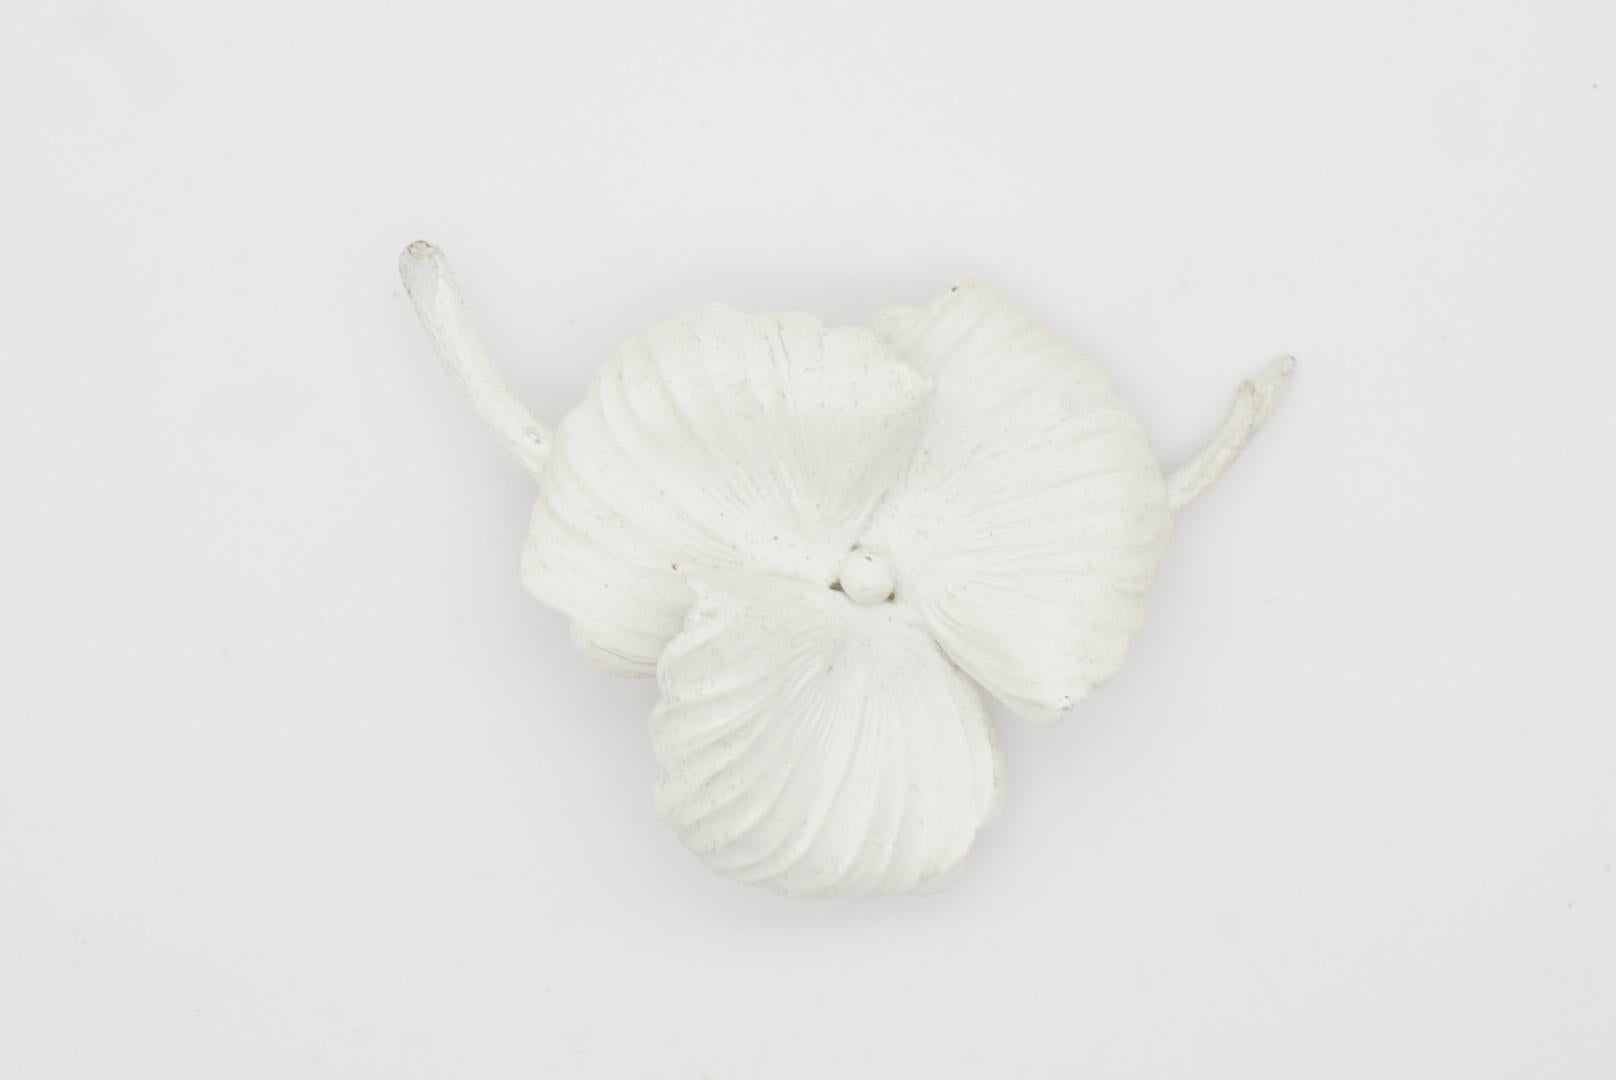 Christian Dior GROSSE 1961 Vintage Swirl White Trio Clover Flower Leaf Brooch For Sale 1